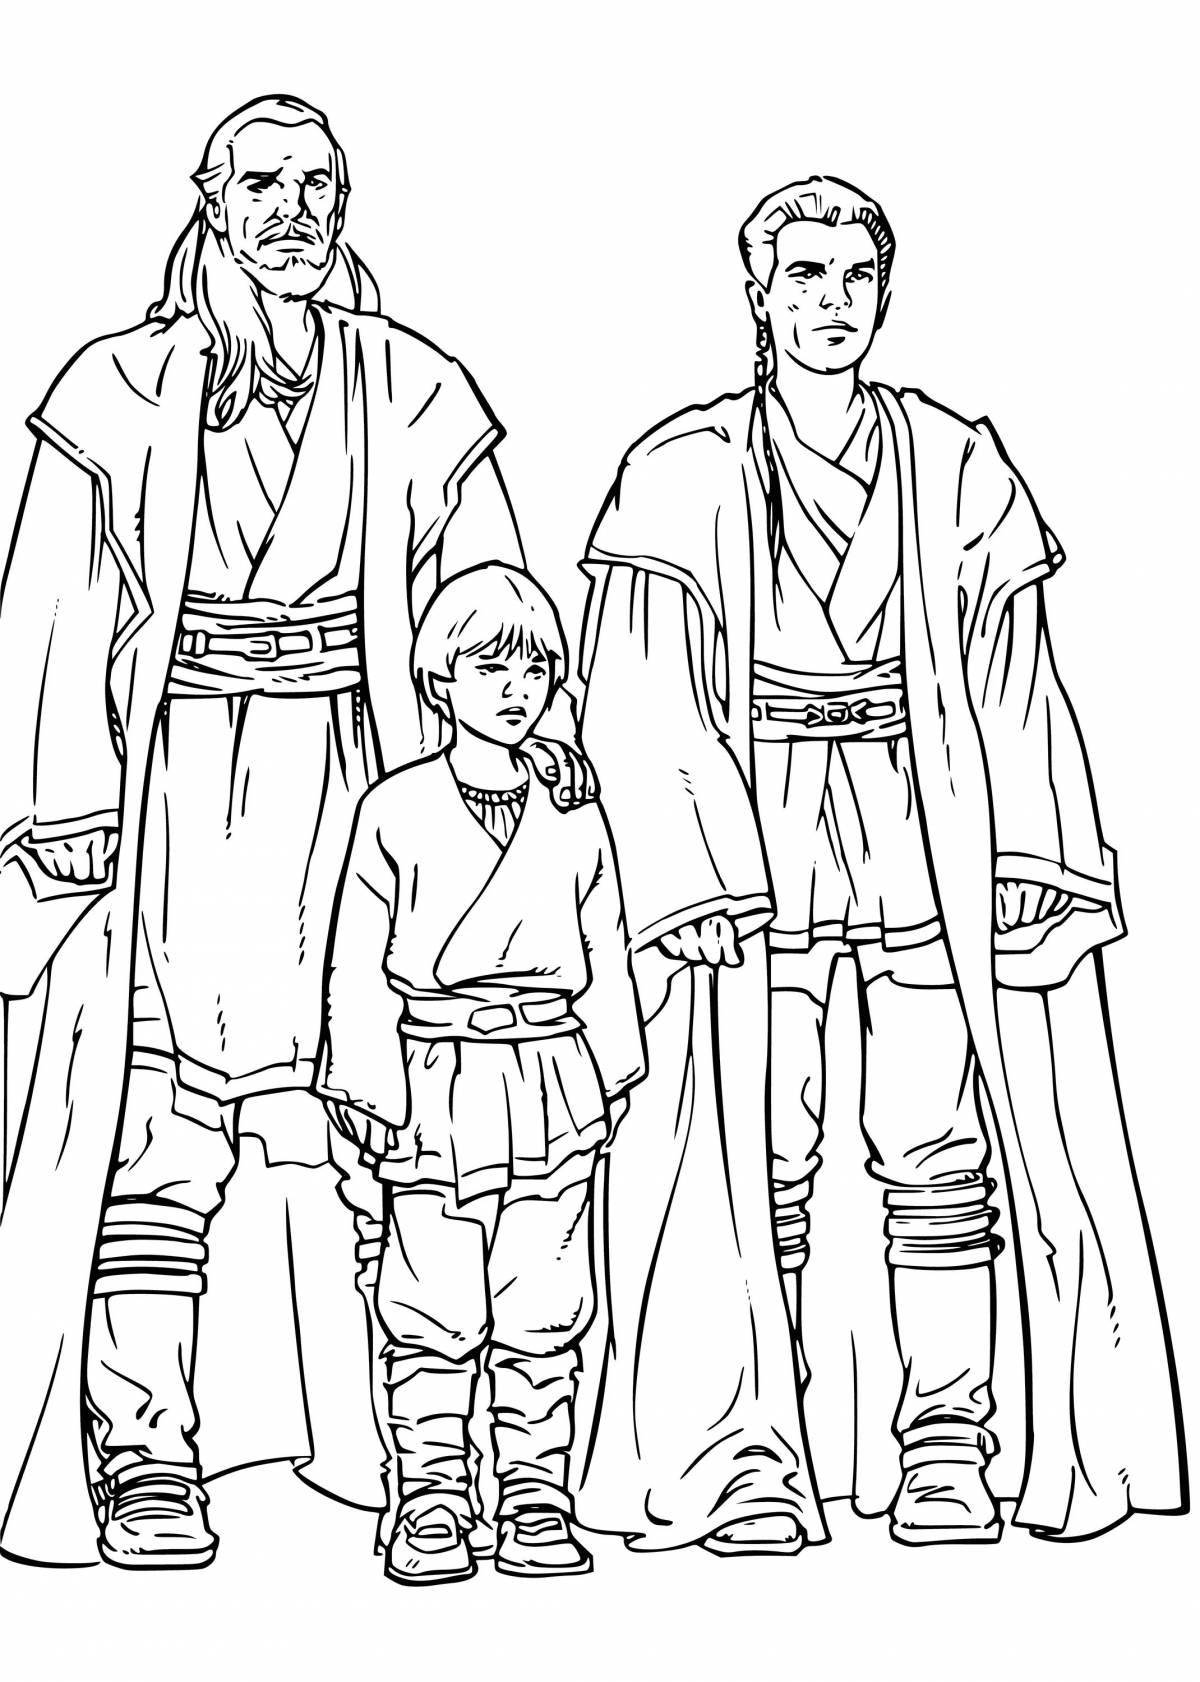 Obi-wan kenobi's bright coloring page